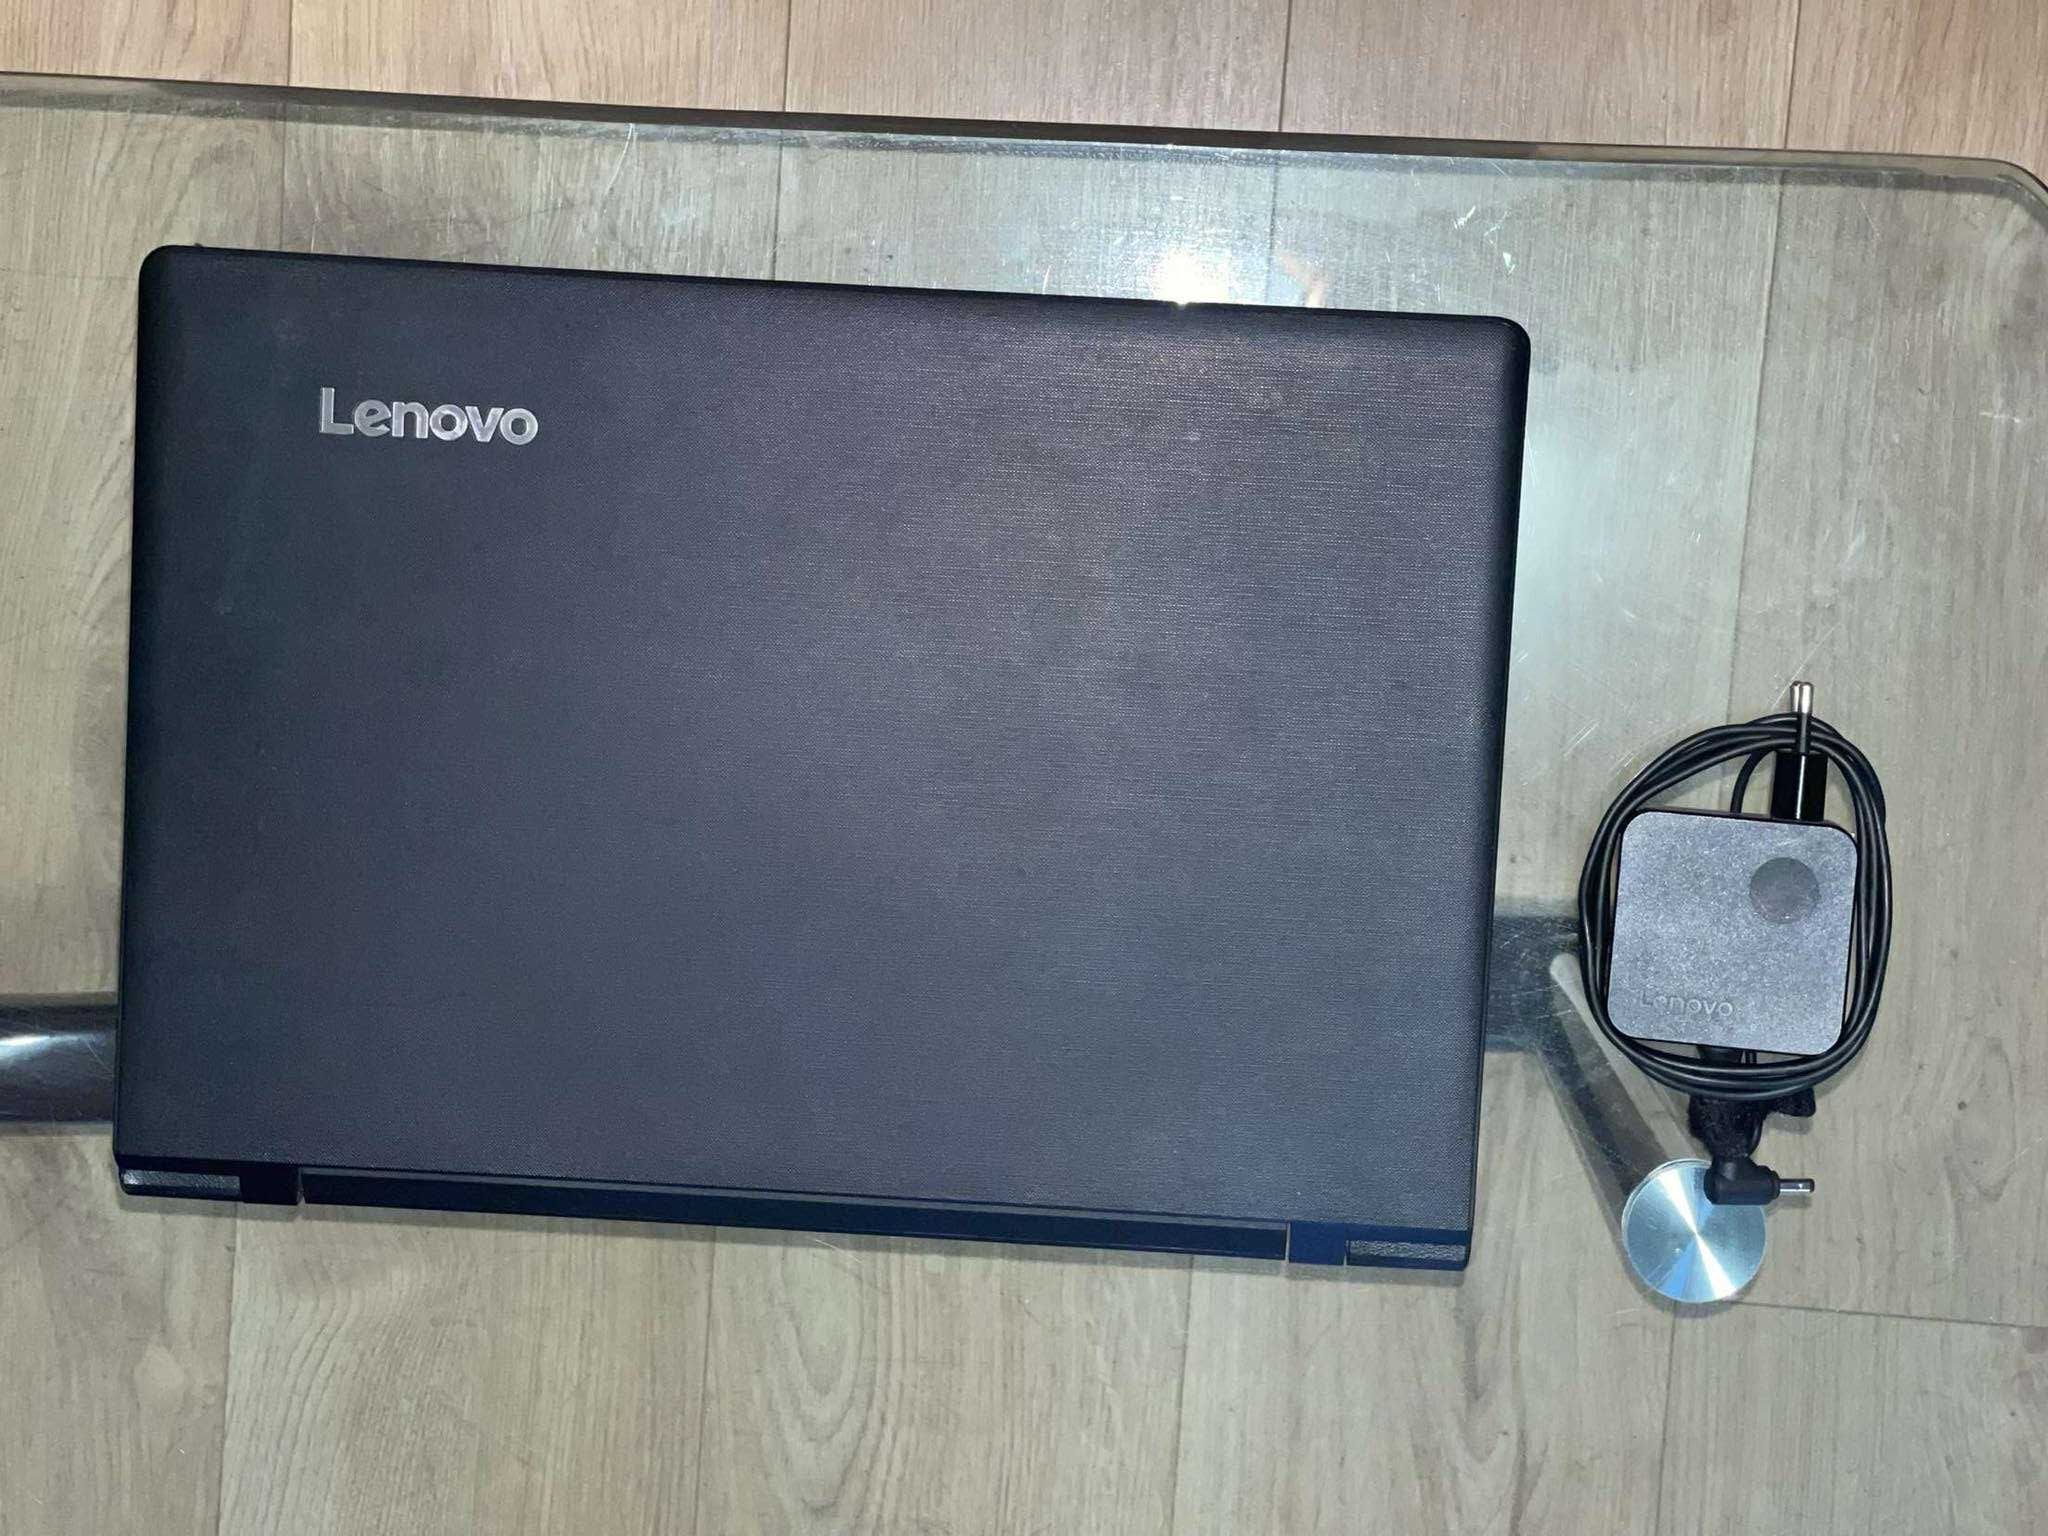 Lenovo iDeadpad 110